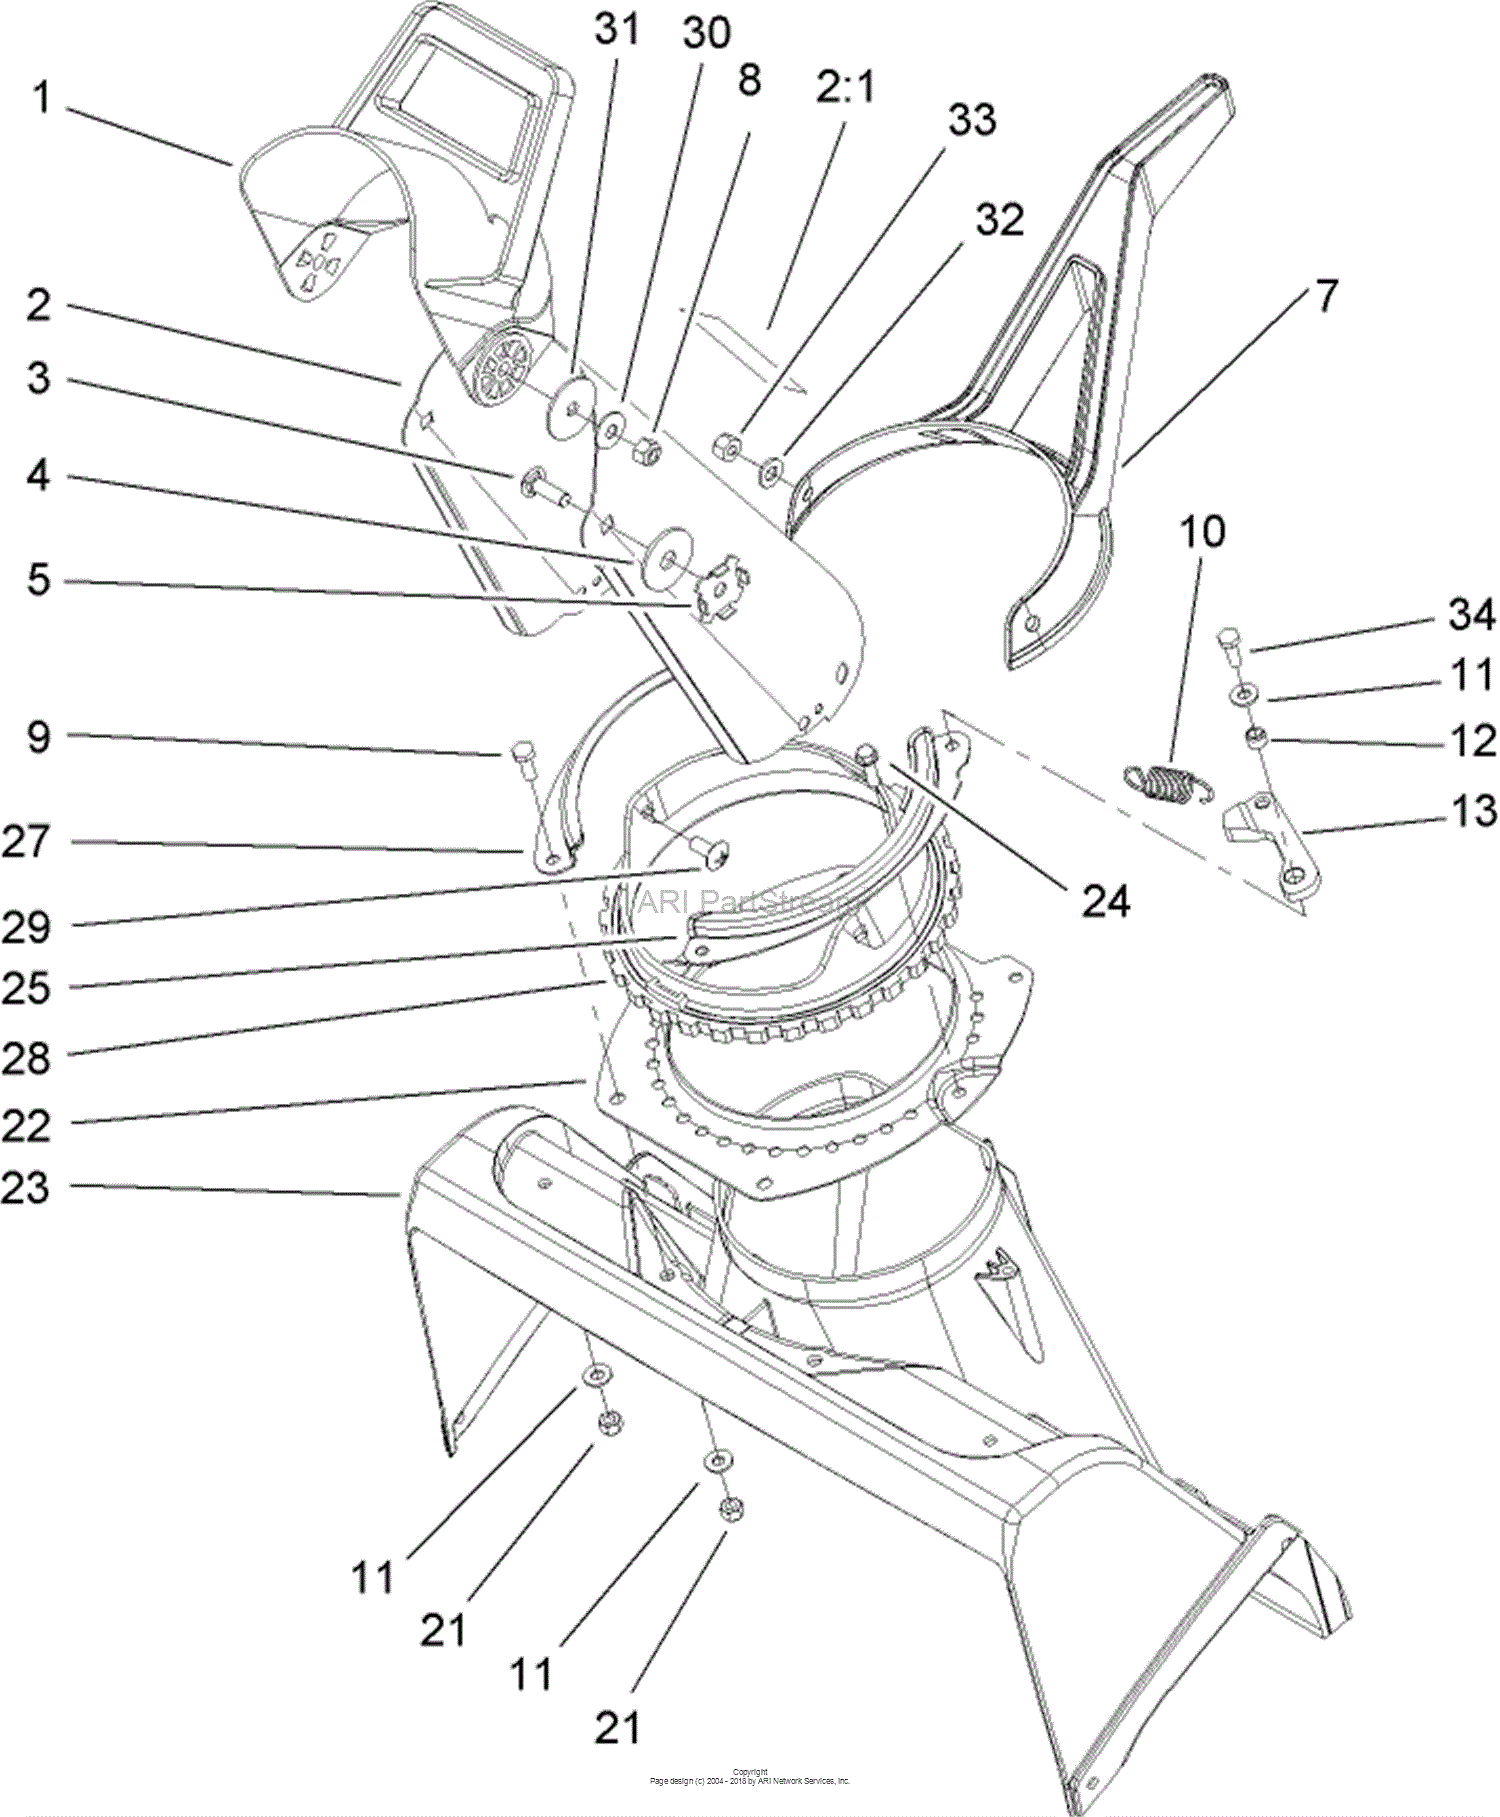 toro ccr 2450 parts diagram